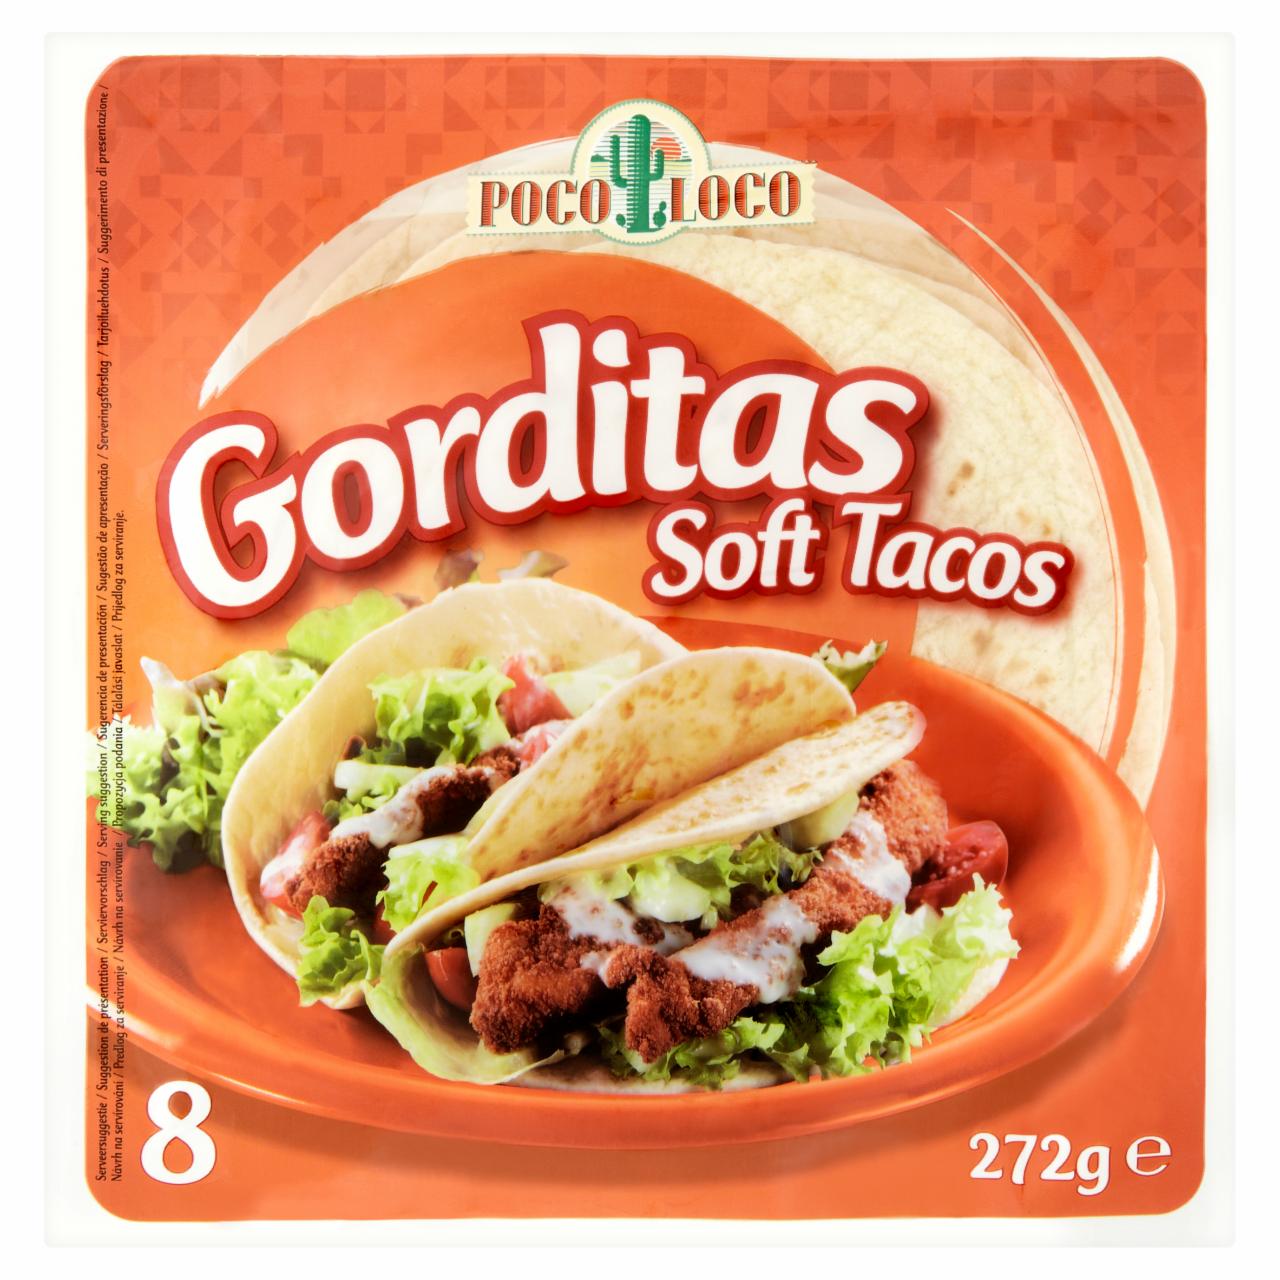 Képek - Poco Loco Gorditas Soft taco búzalisztből 8 db 272 g